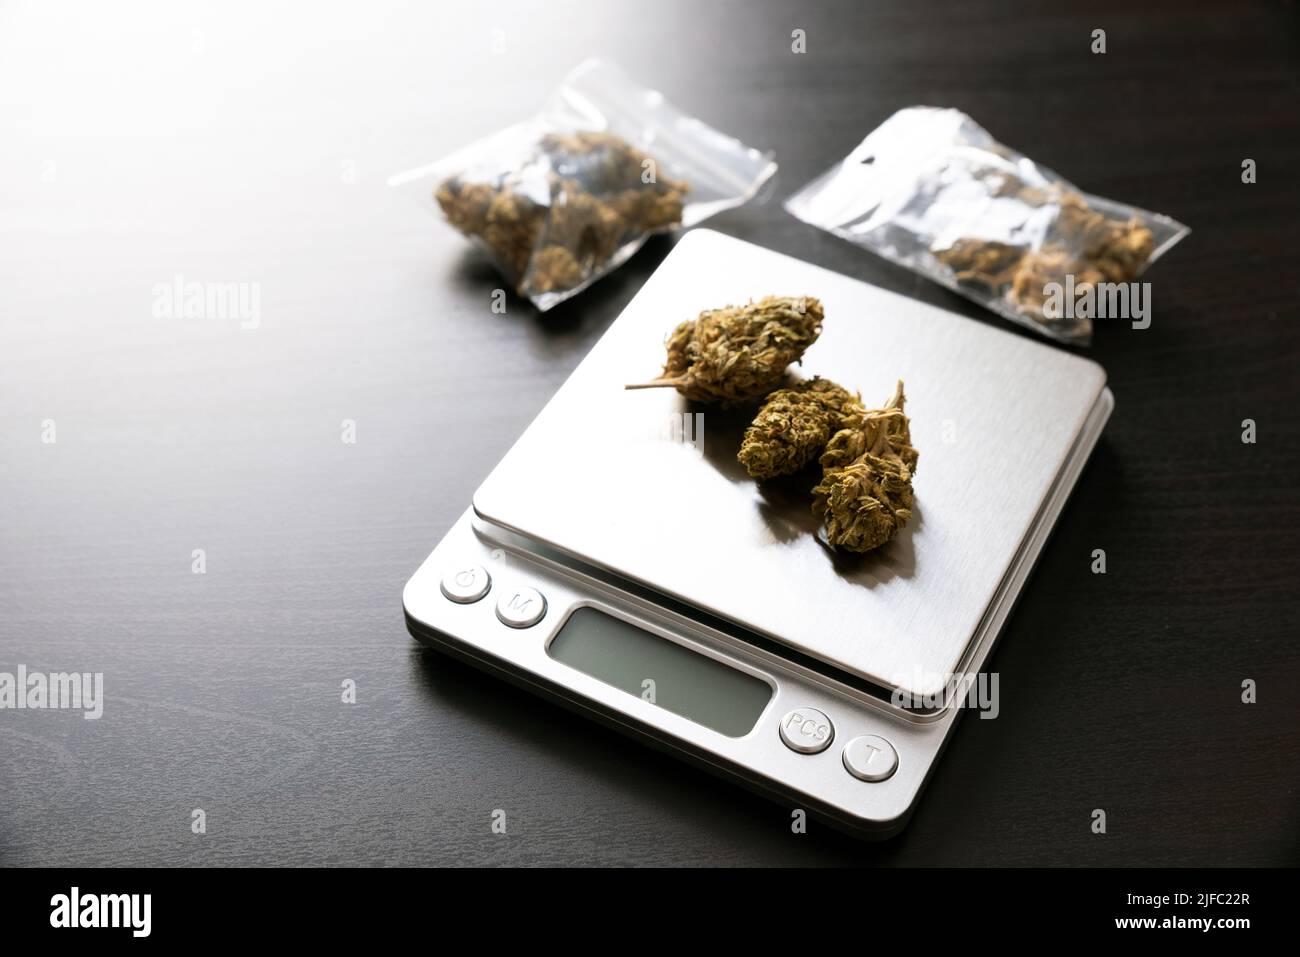 Marijuana, scale, cannabis, weighting marijuana, ganja, selling cannabis,  weighting cannabis icon - Download on Iconfinder